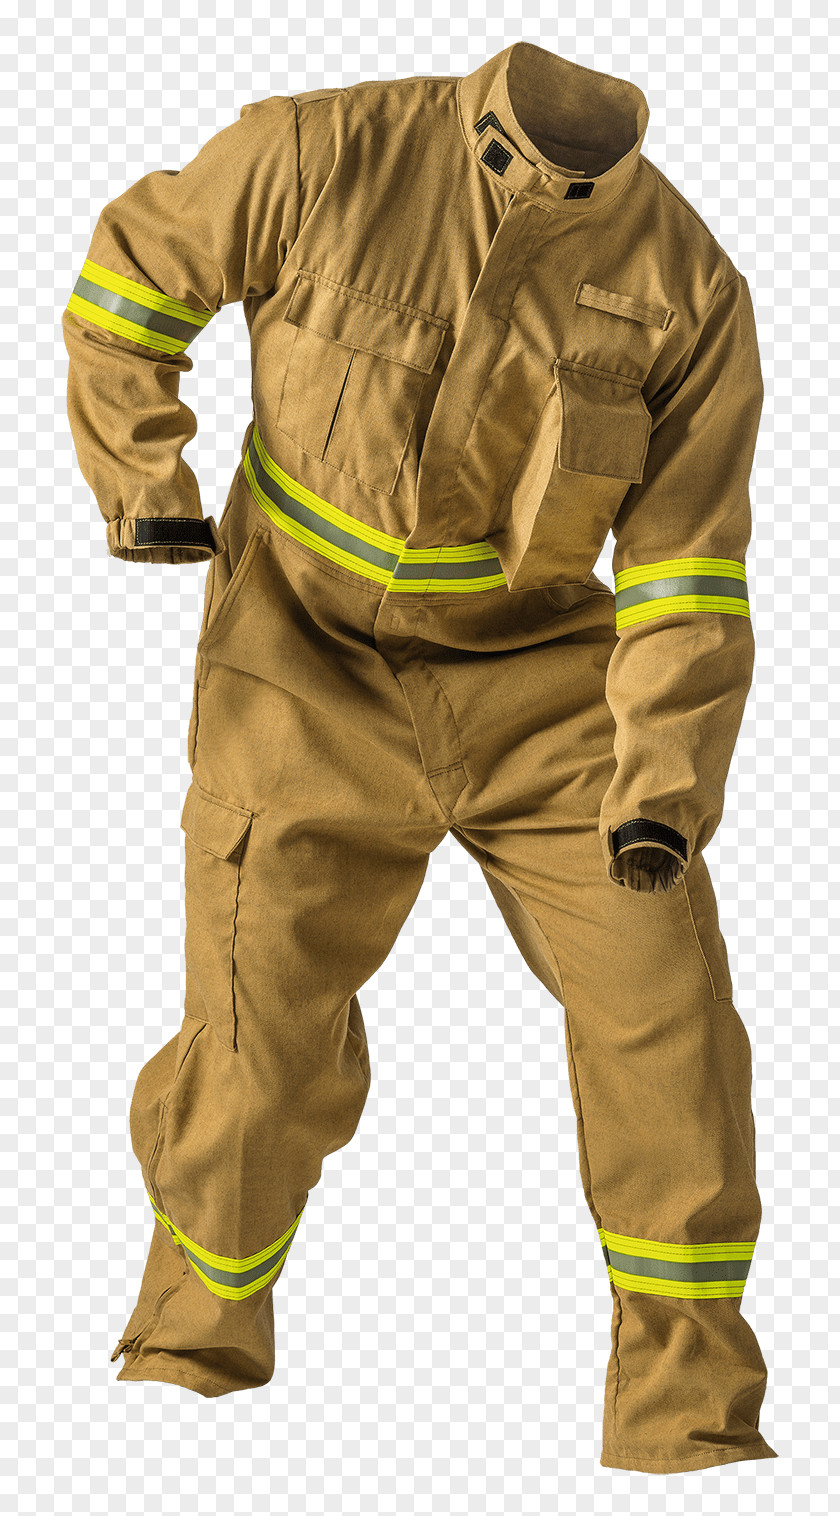 Bi-color Package Design Firefighter Bunker Gear Boilersuit Hazardous Material Suits Personal Protective Equipment PNG